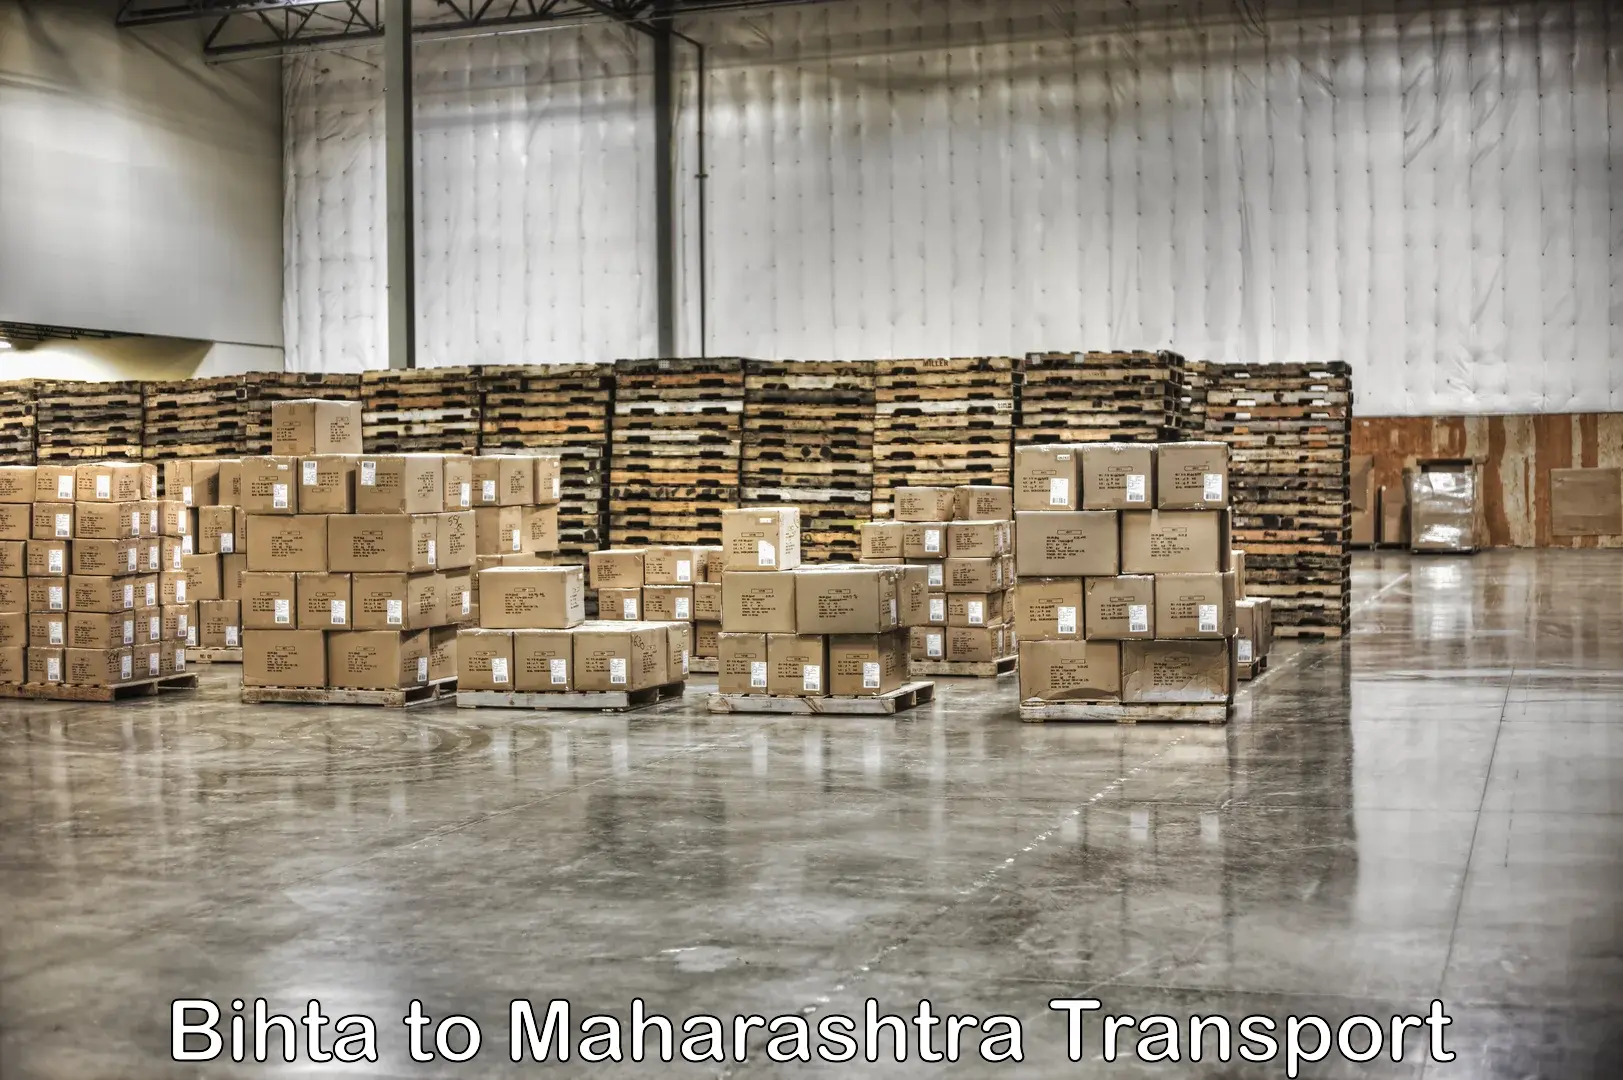 Furniture transport service in Bihta to Mumbai